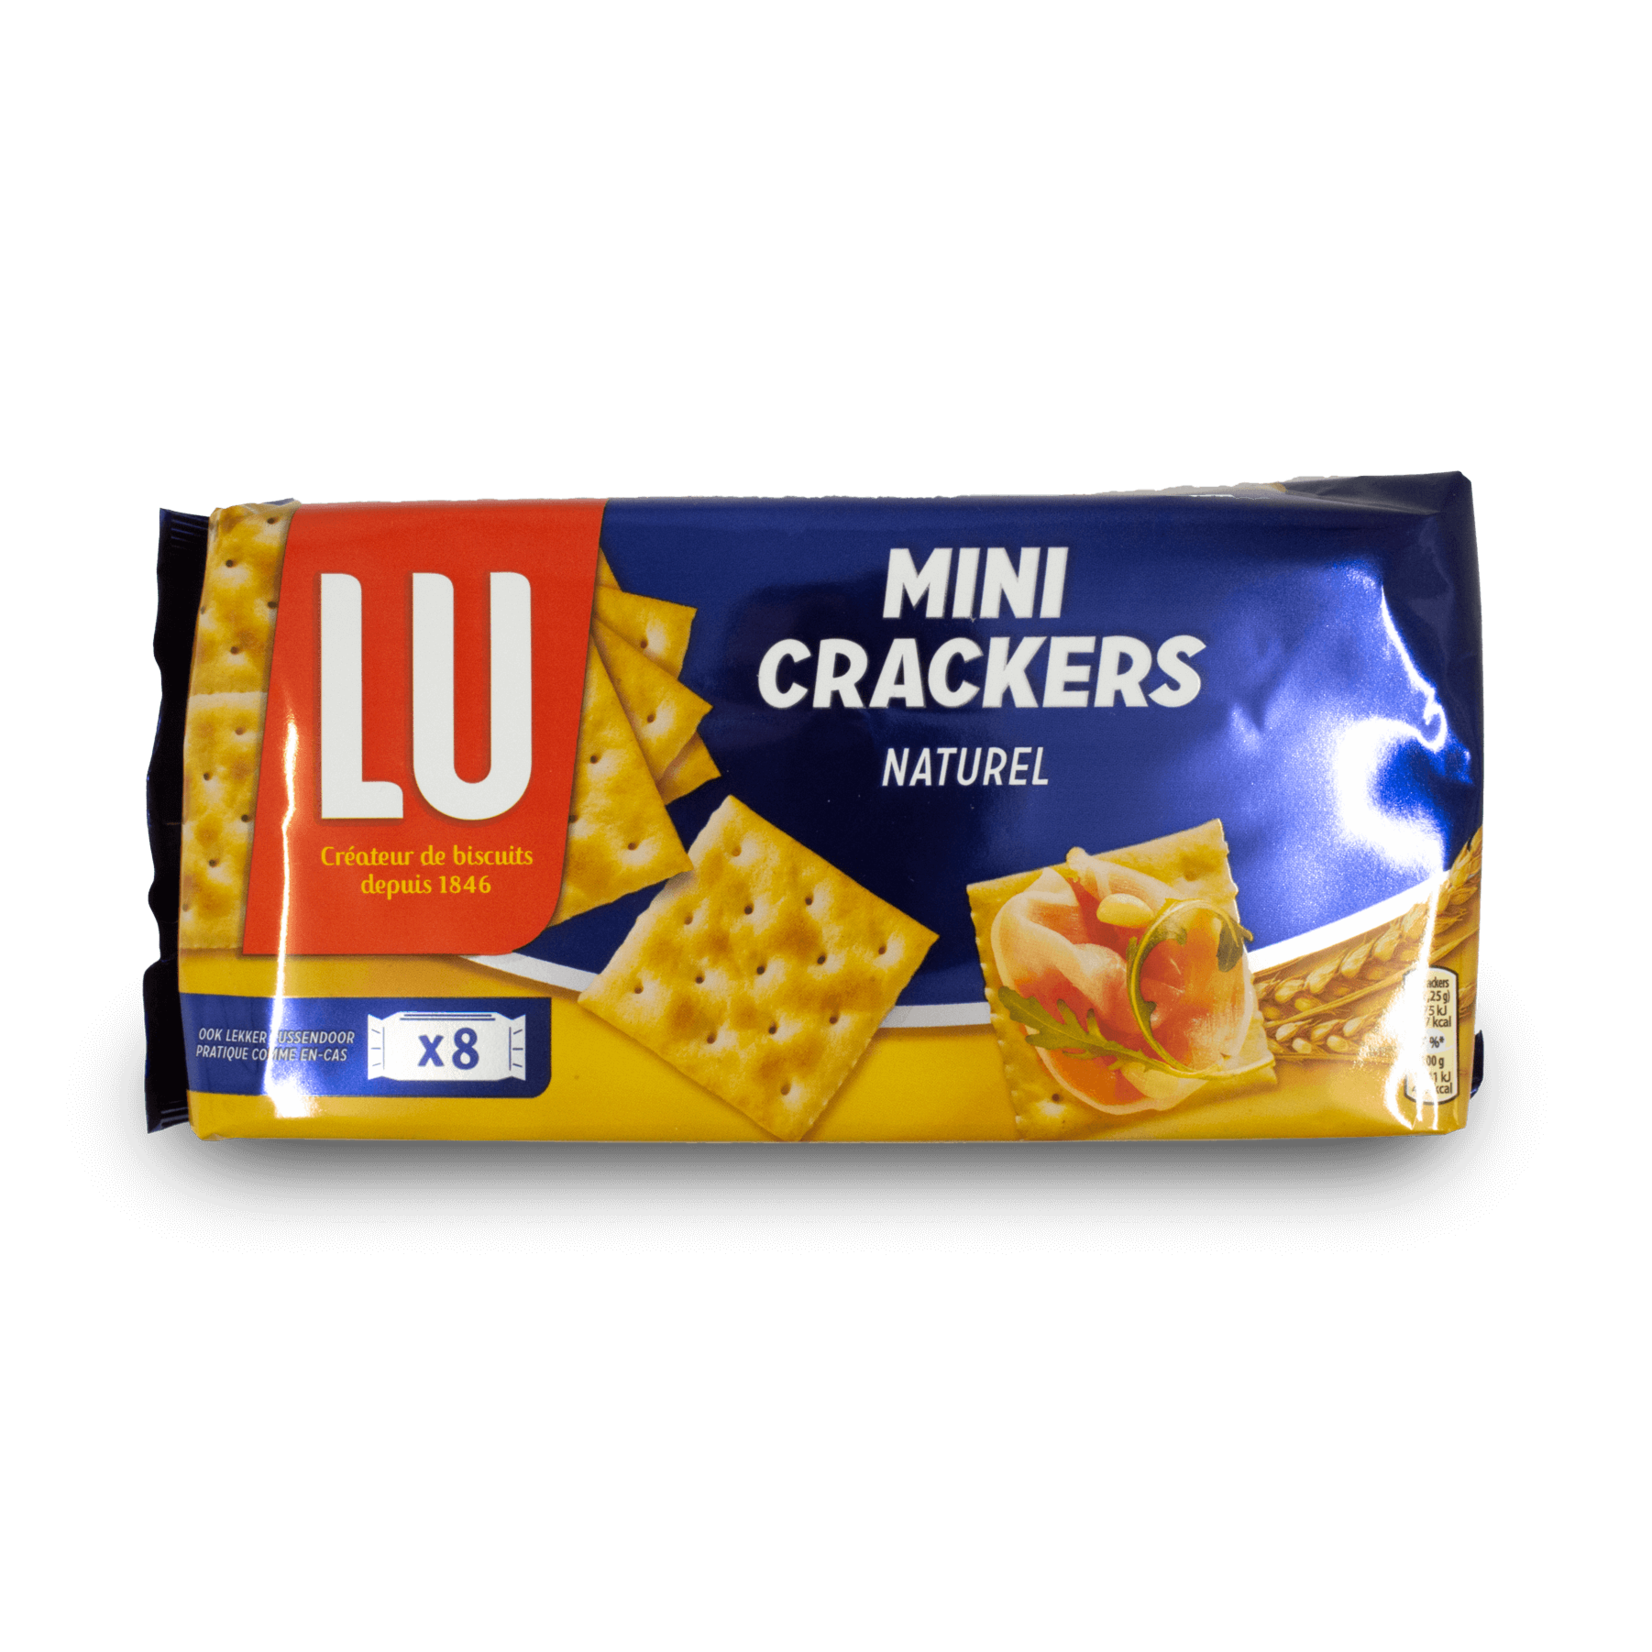 Lu Lu Mini Crackers Natural 250g